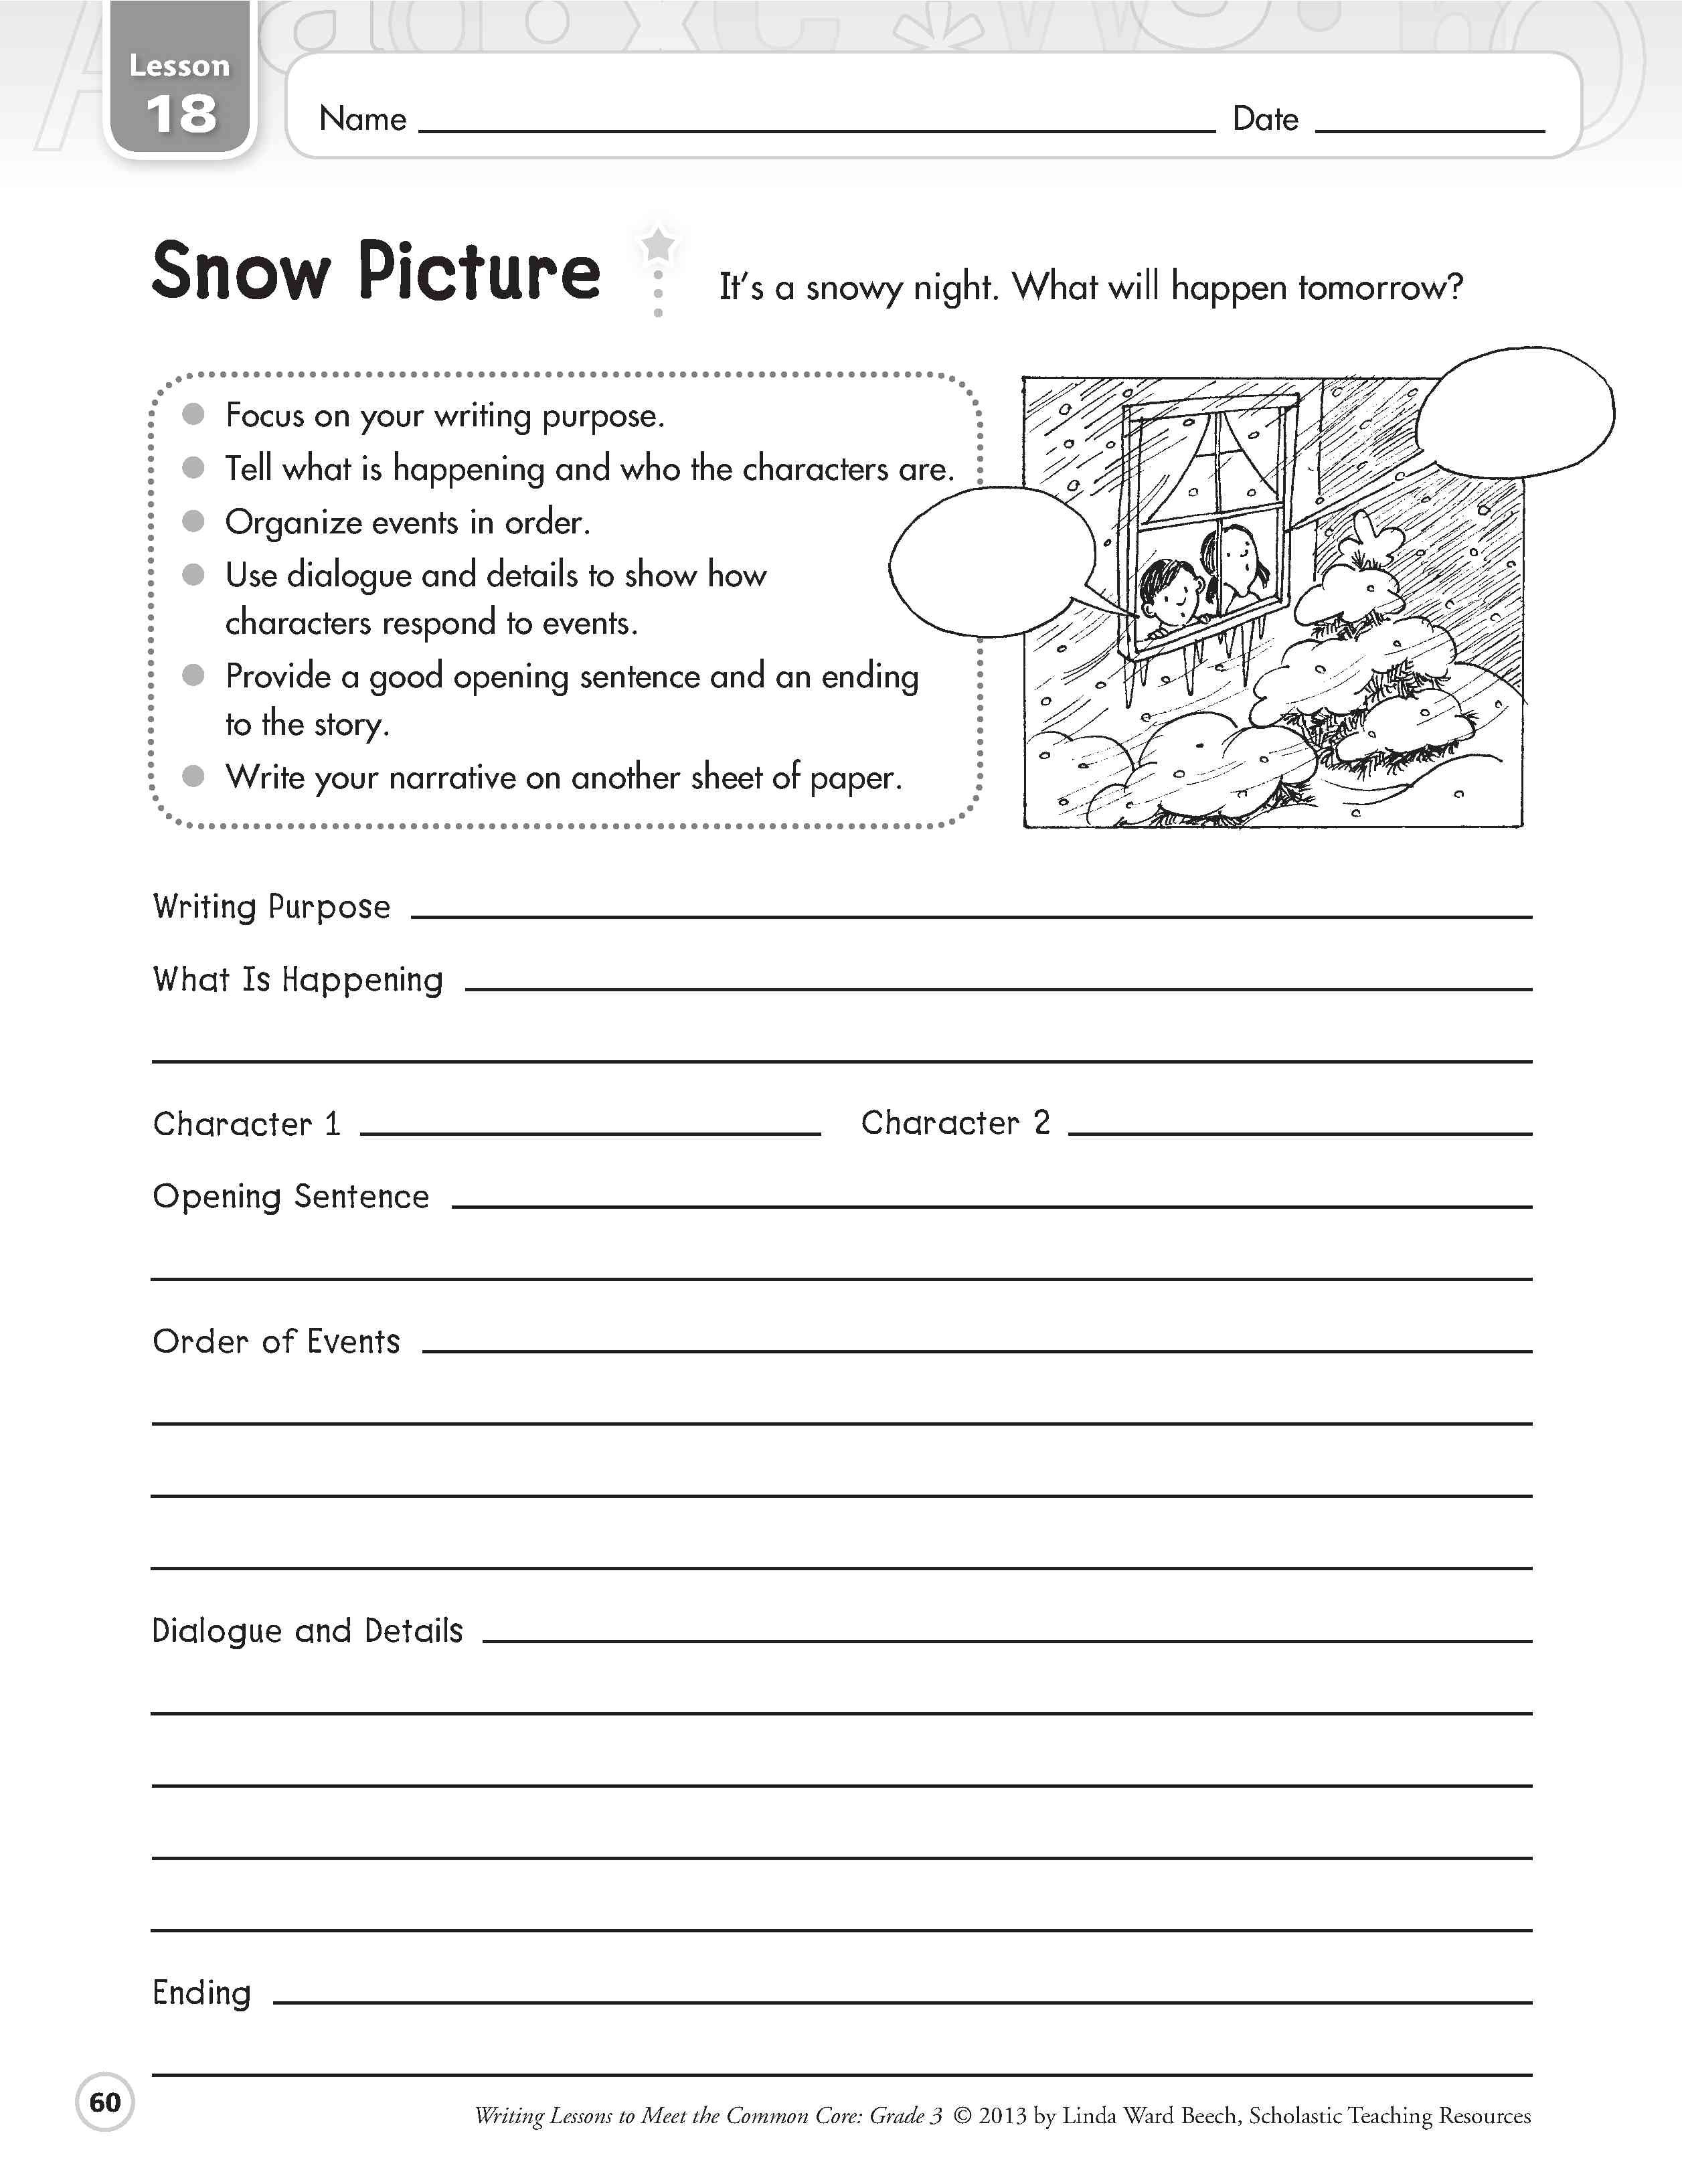 4th grade creative writing worksheet